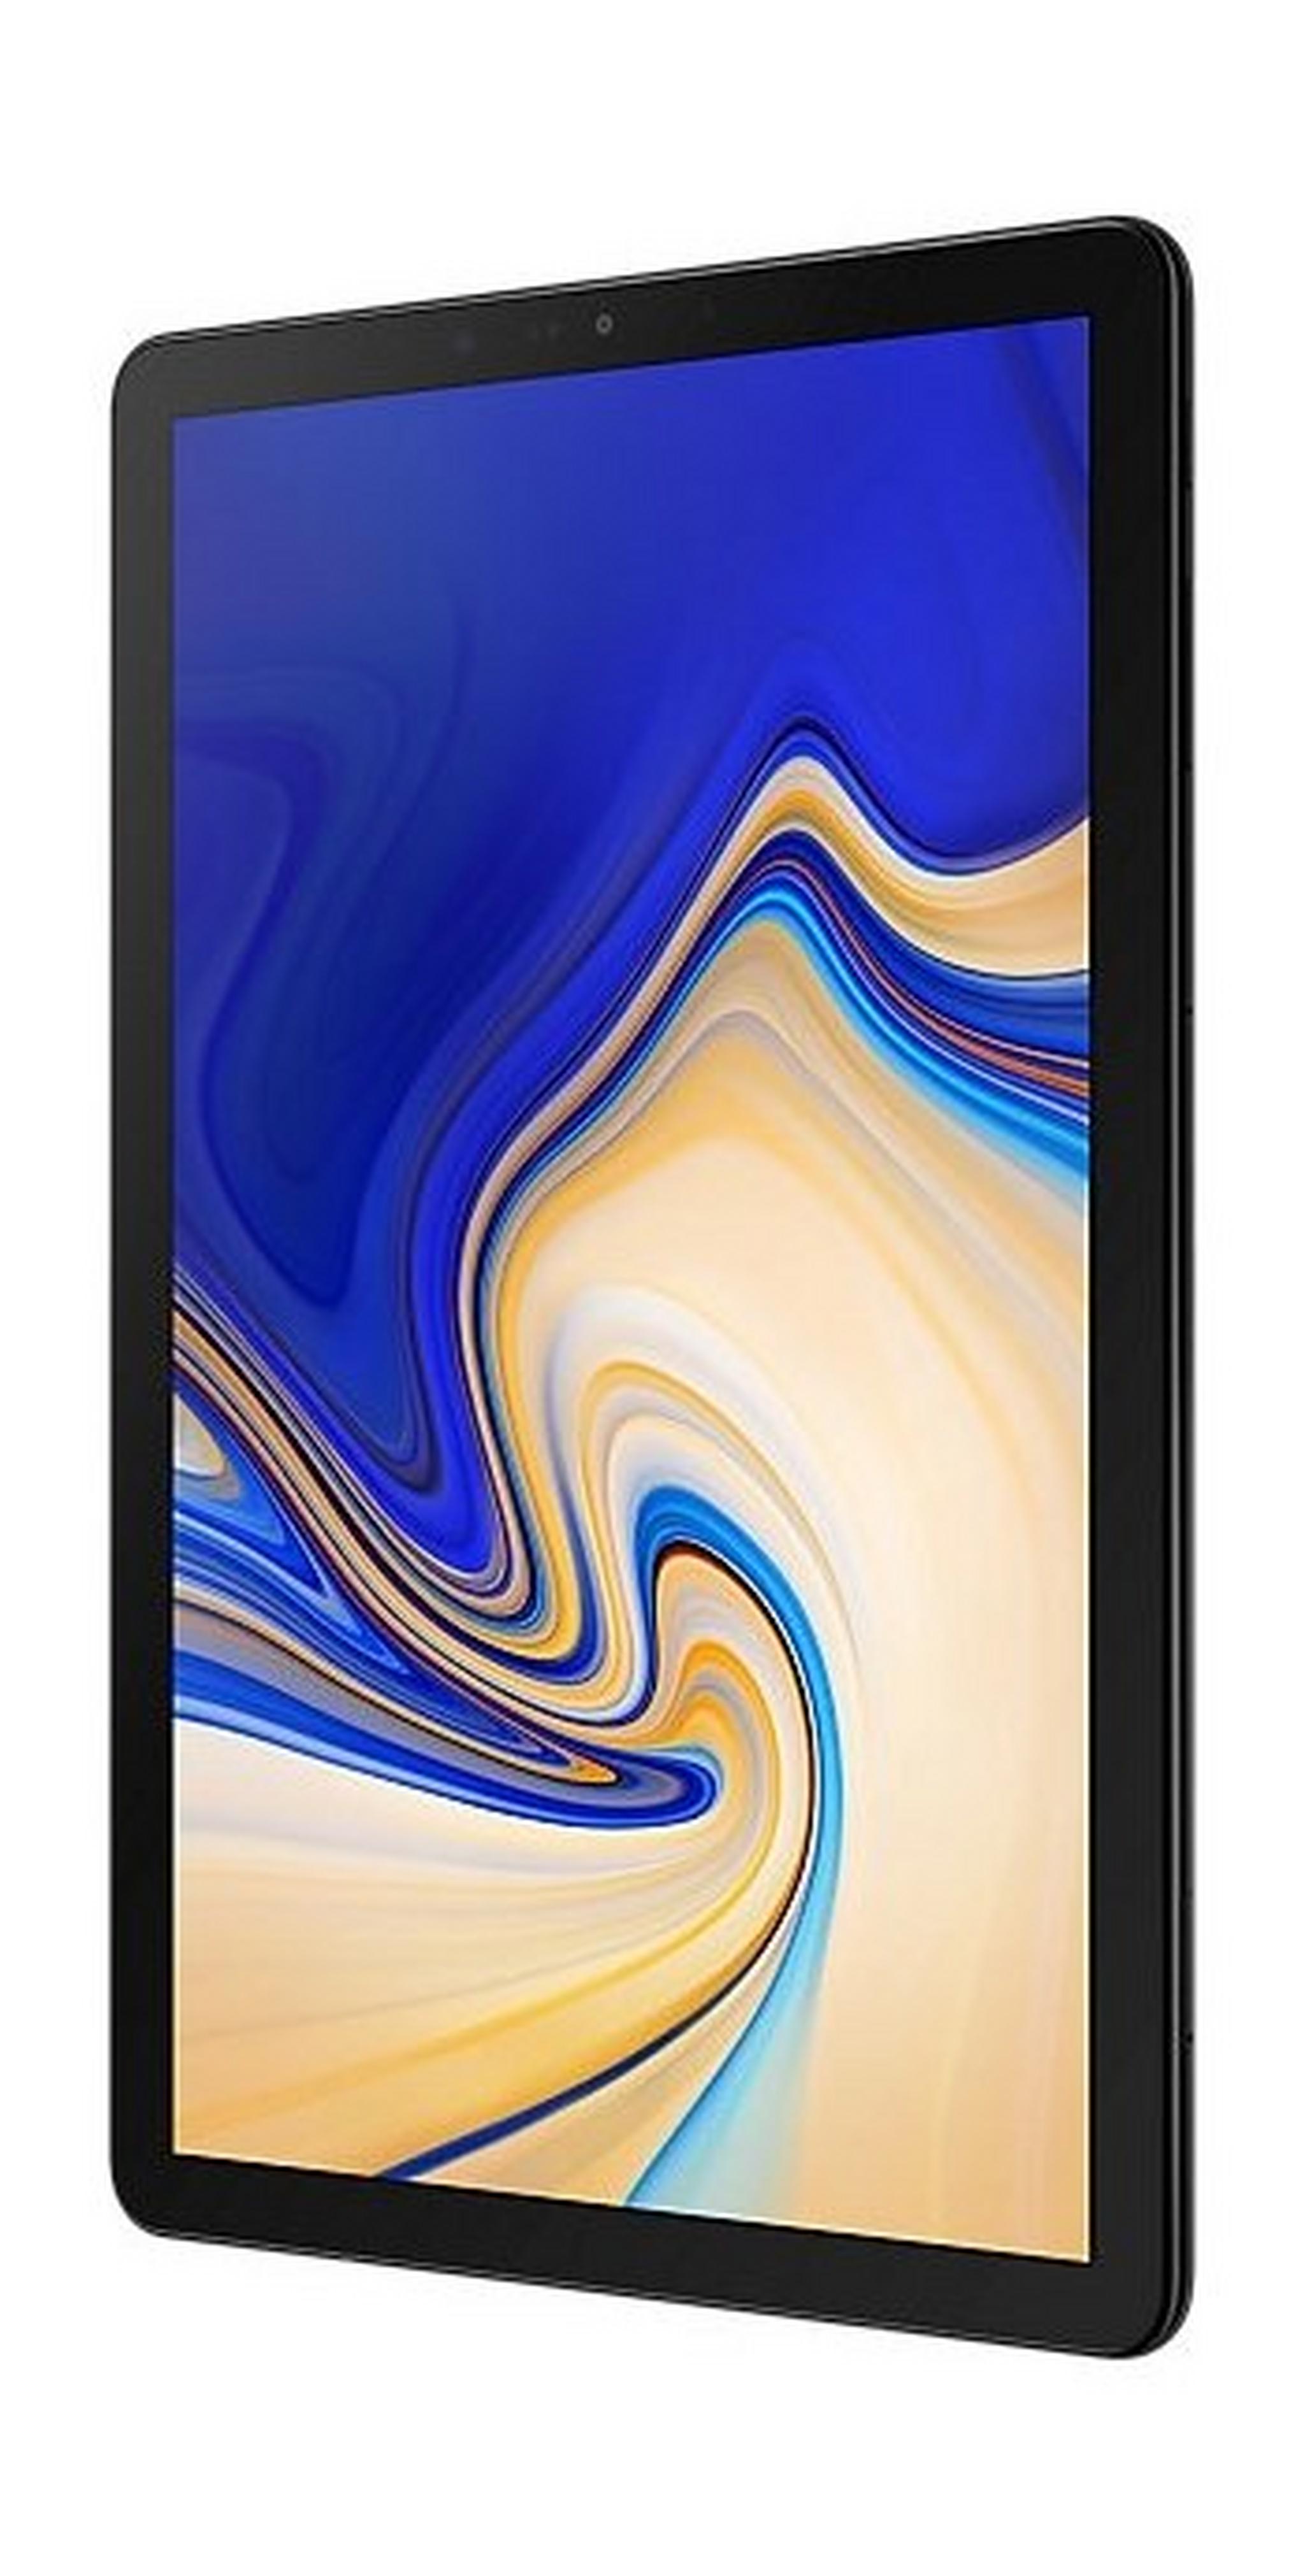 Samsung Galaxy Tab S4 64GB 10.5-inch 4G Wifi Tablet - Black